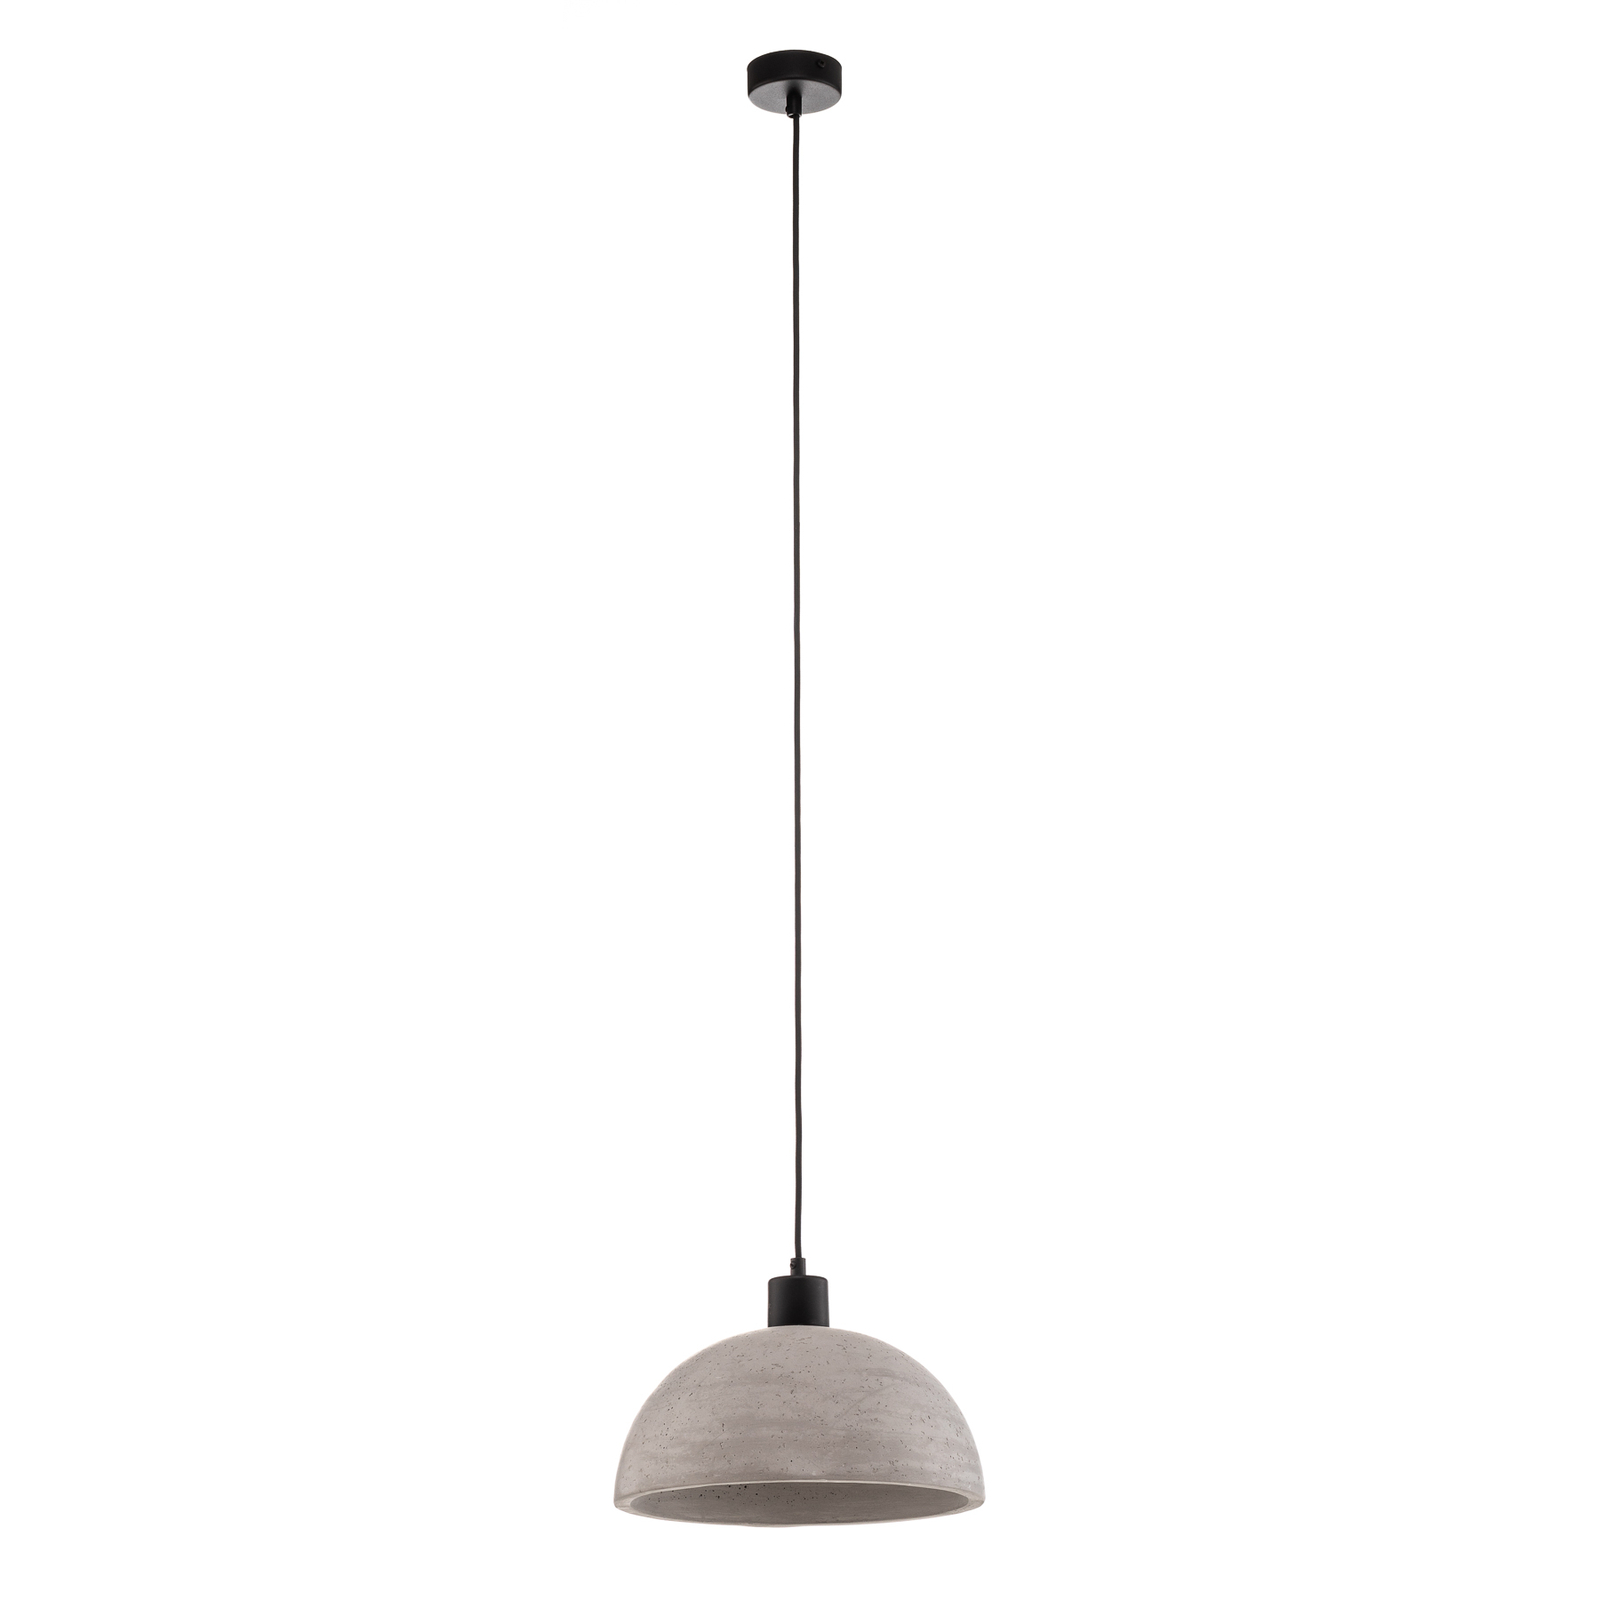 Lito függő lámpa beton búrával, félgömb